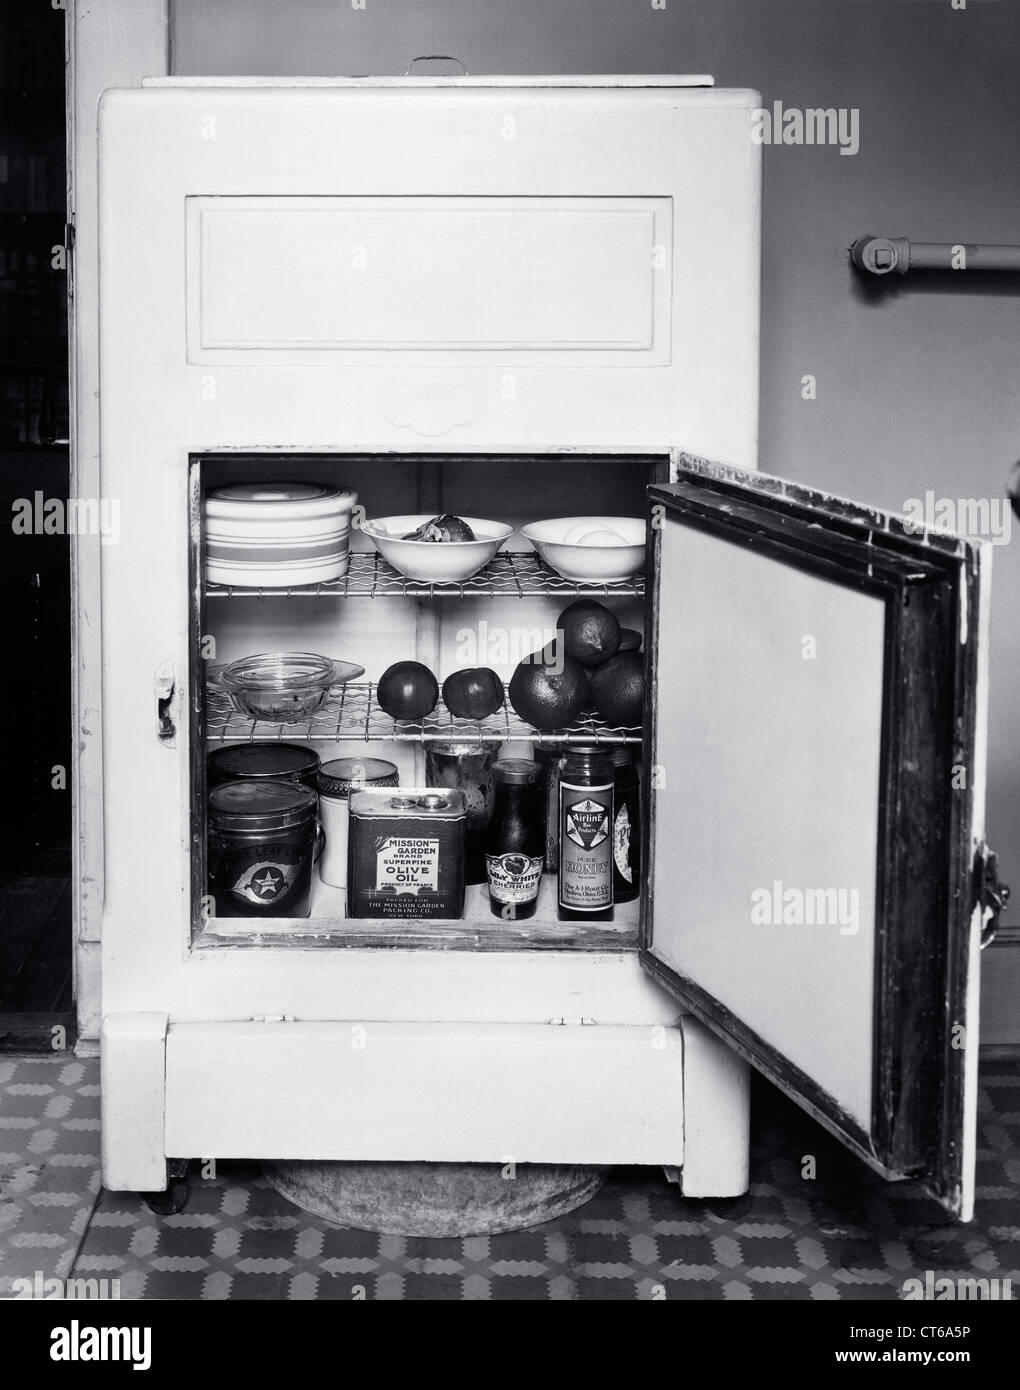 Interior of vintage refrigerator Stock Photo